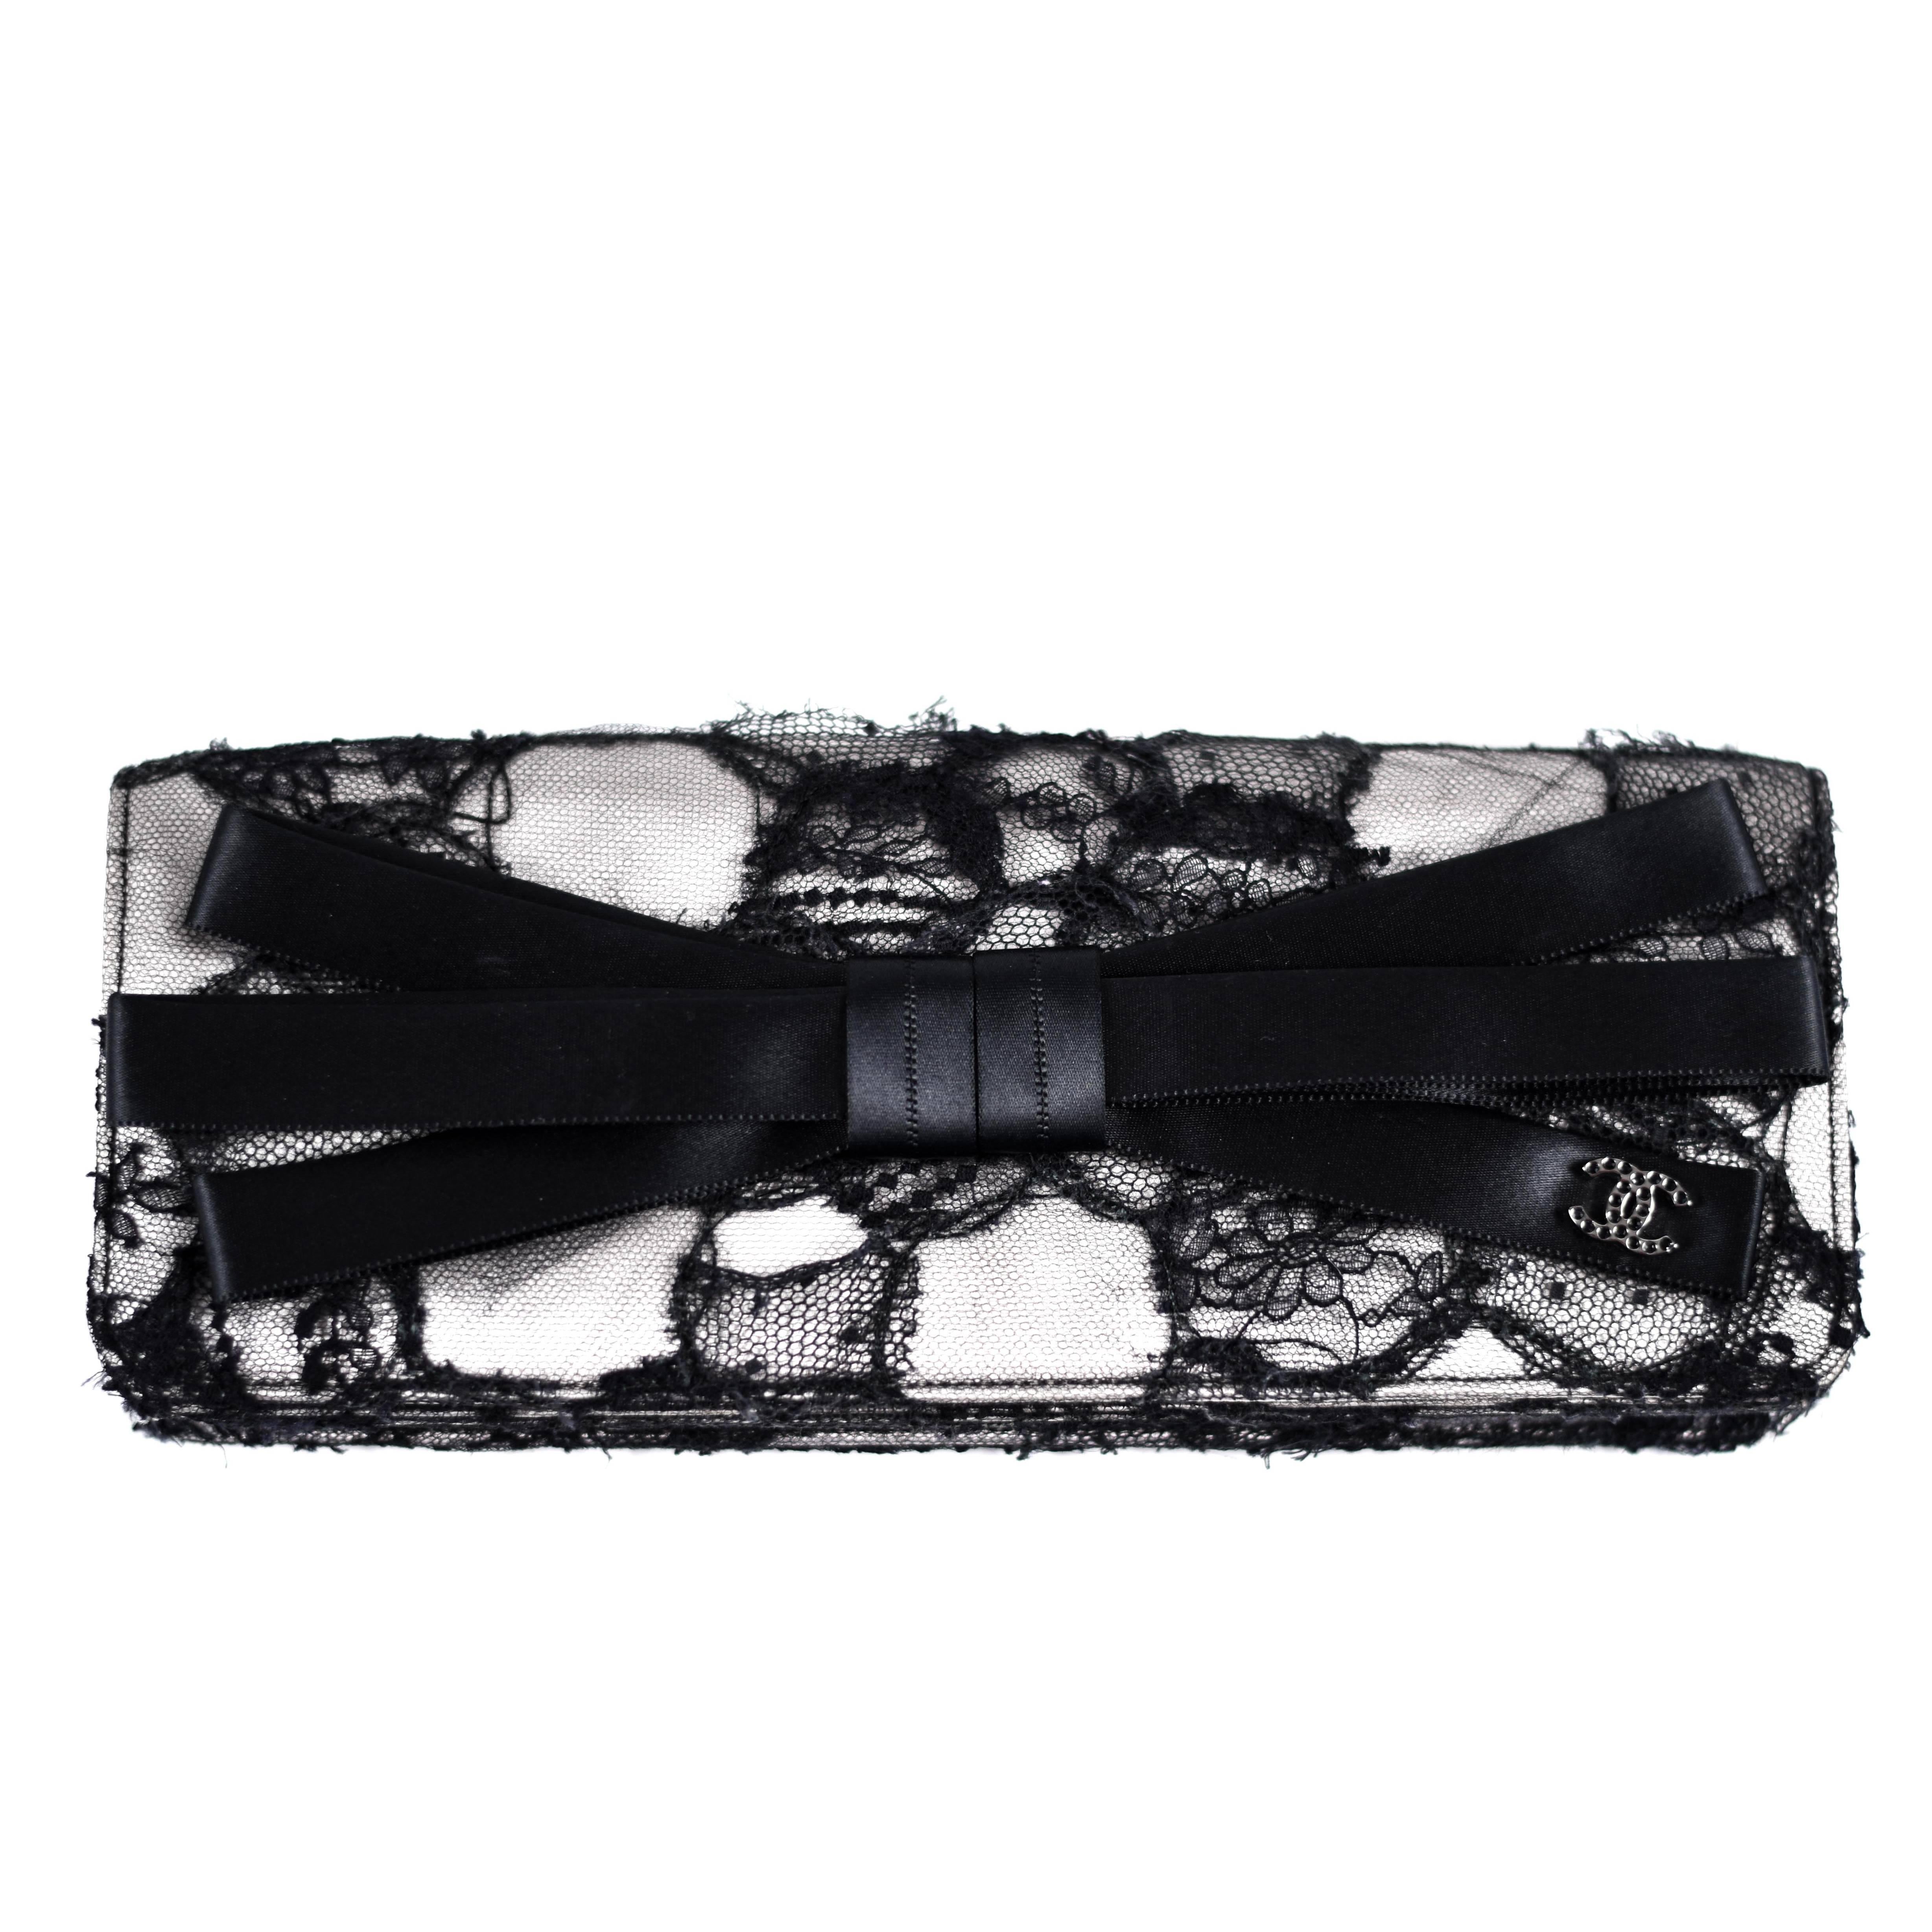 Chanel Lace Crystal Bow Clutch - 2009 Black White Satin CC Logo Silver Handbag For Sale